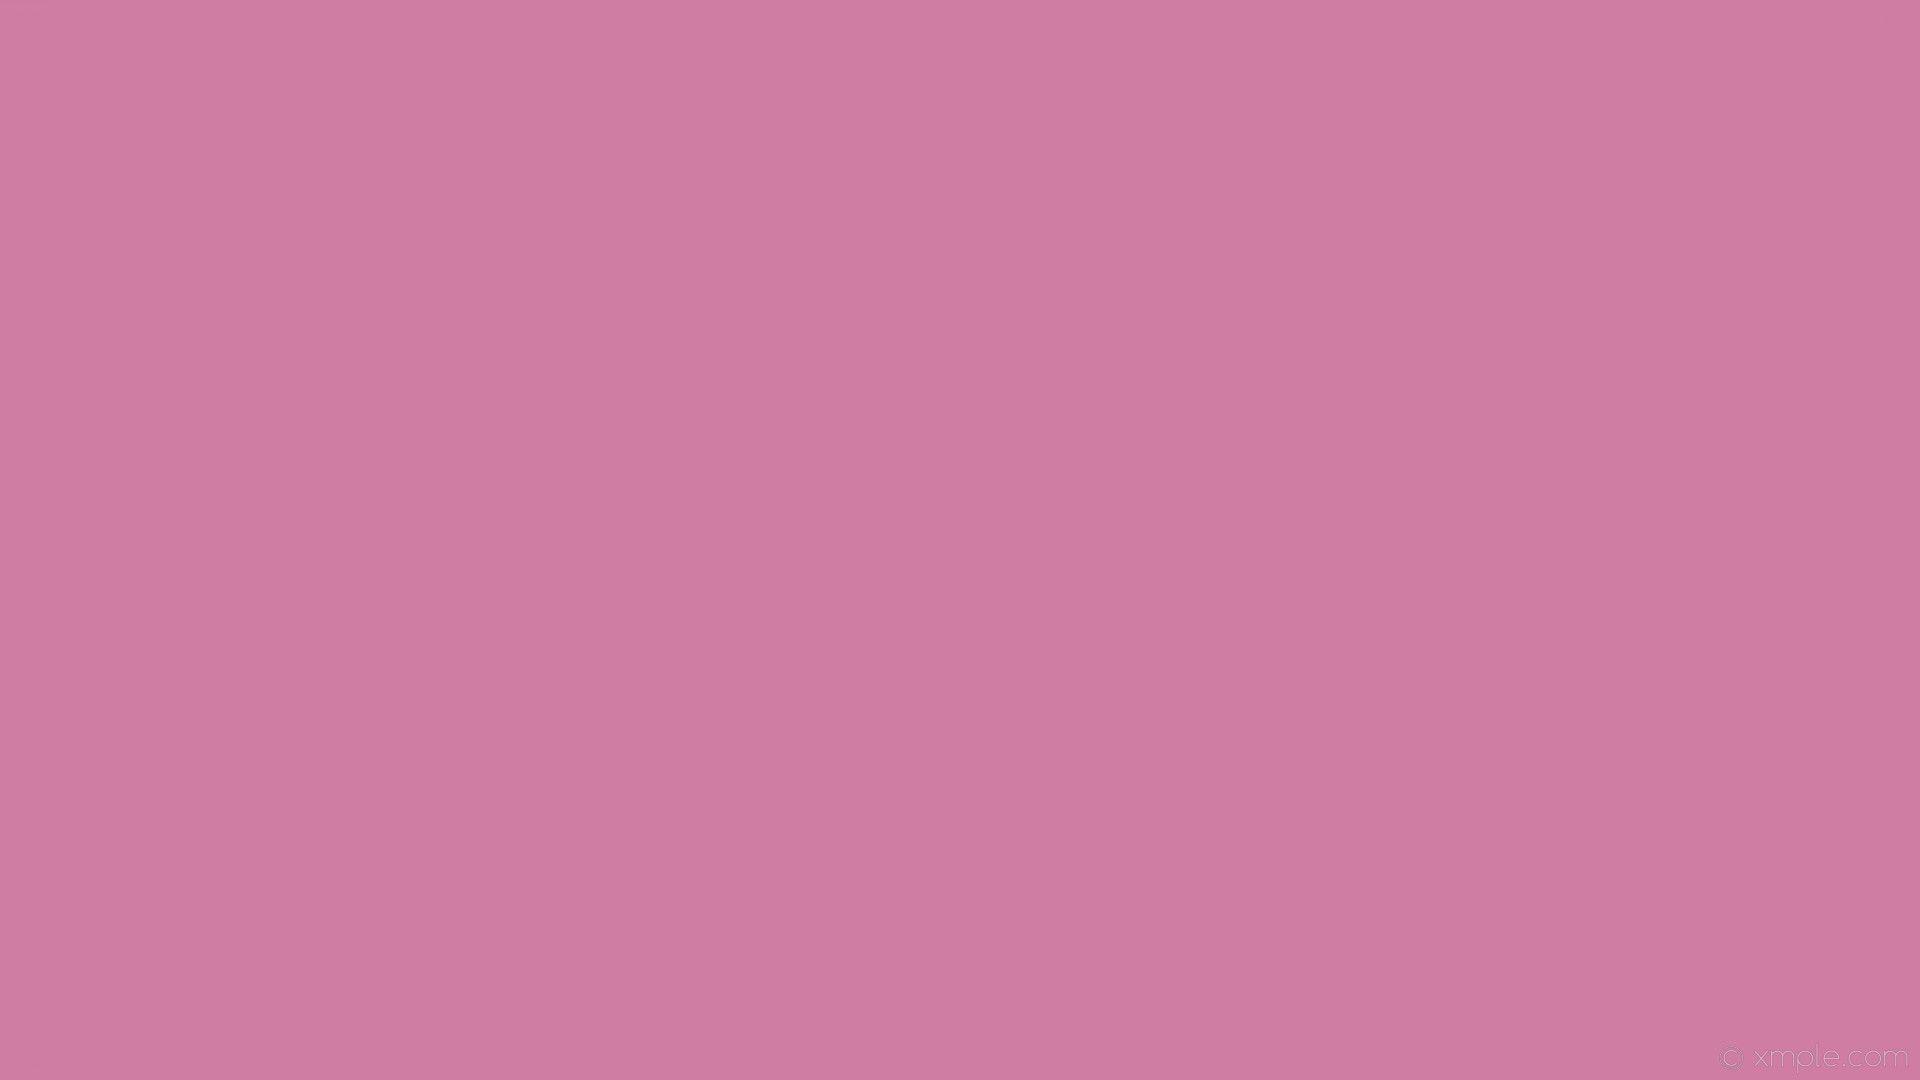 HEUREKA Light Pink Plain matt Wallpaper  Self Adhesive  Peel and Stick  Wallpaper for Walls and Home docoration 60 x 1000CM Light Pink   Amazonin Home Improvement